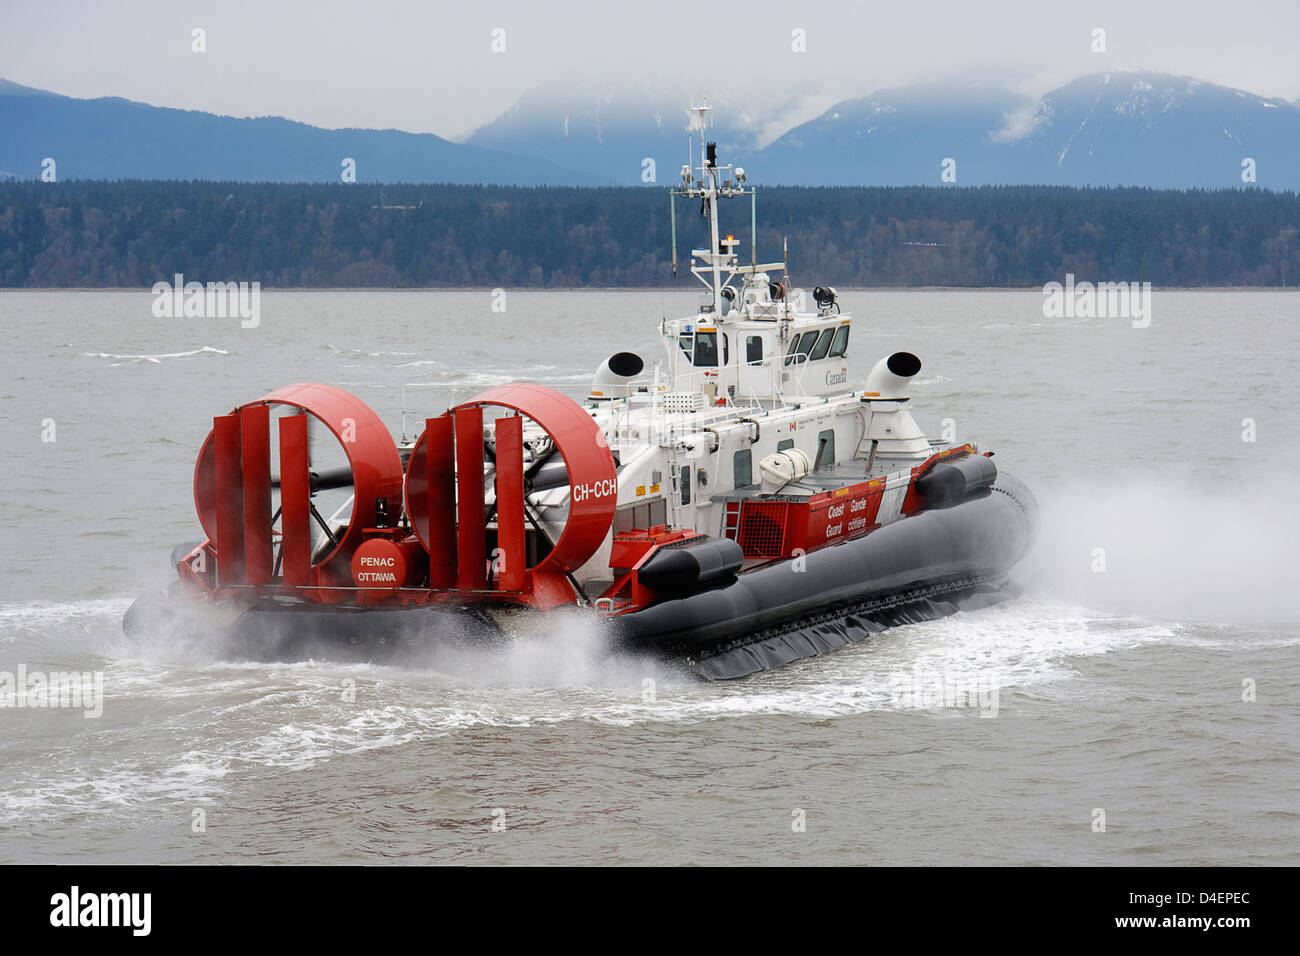 Canadian Coast Guard aerodeslizador Penac, Foto de stock